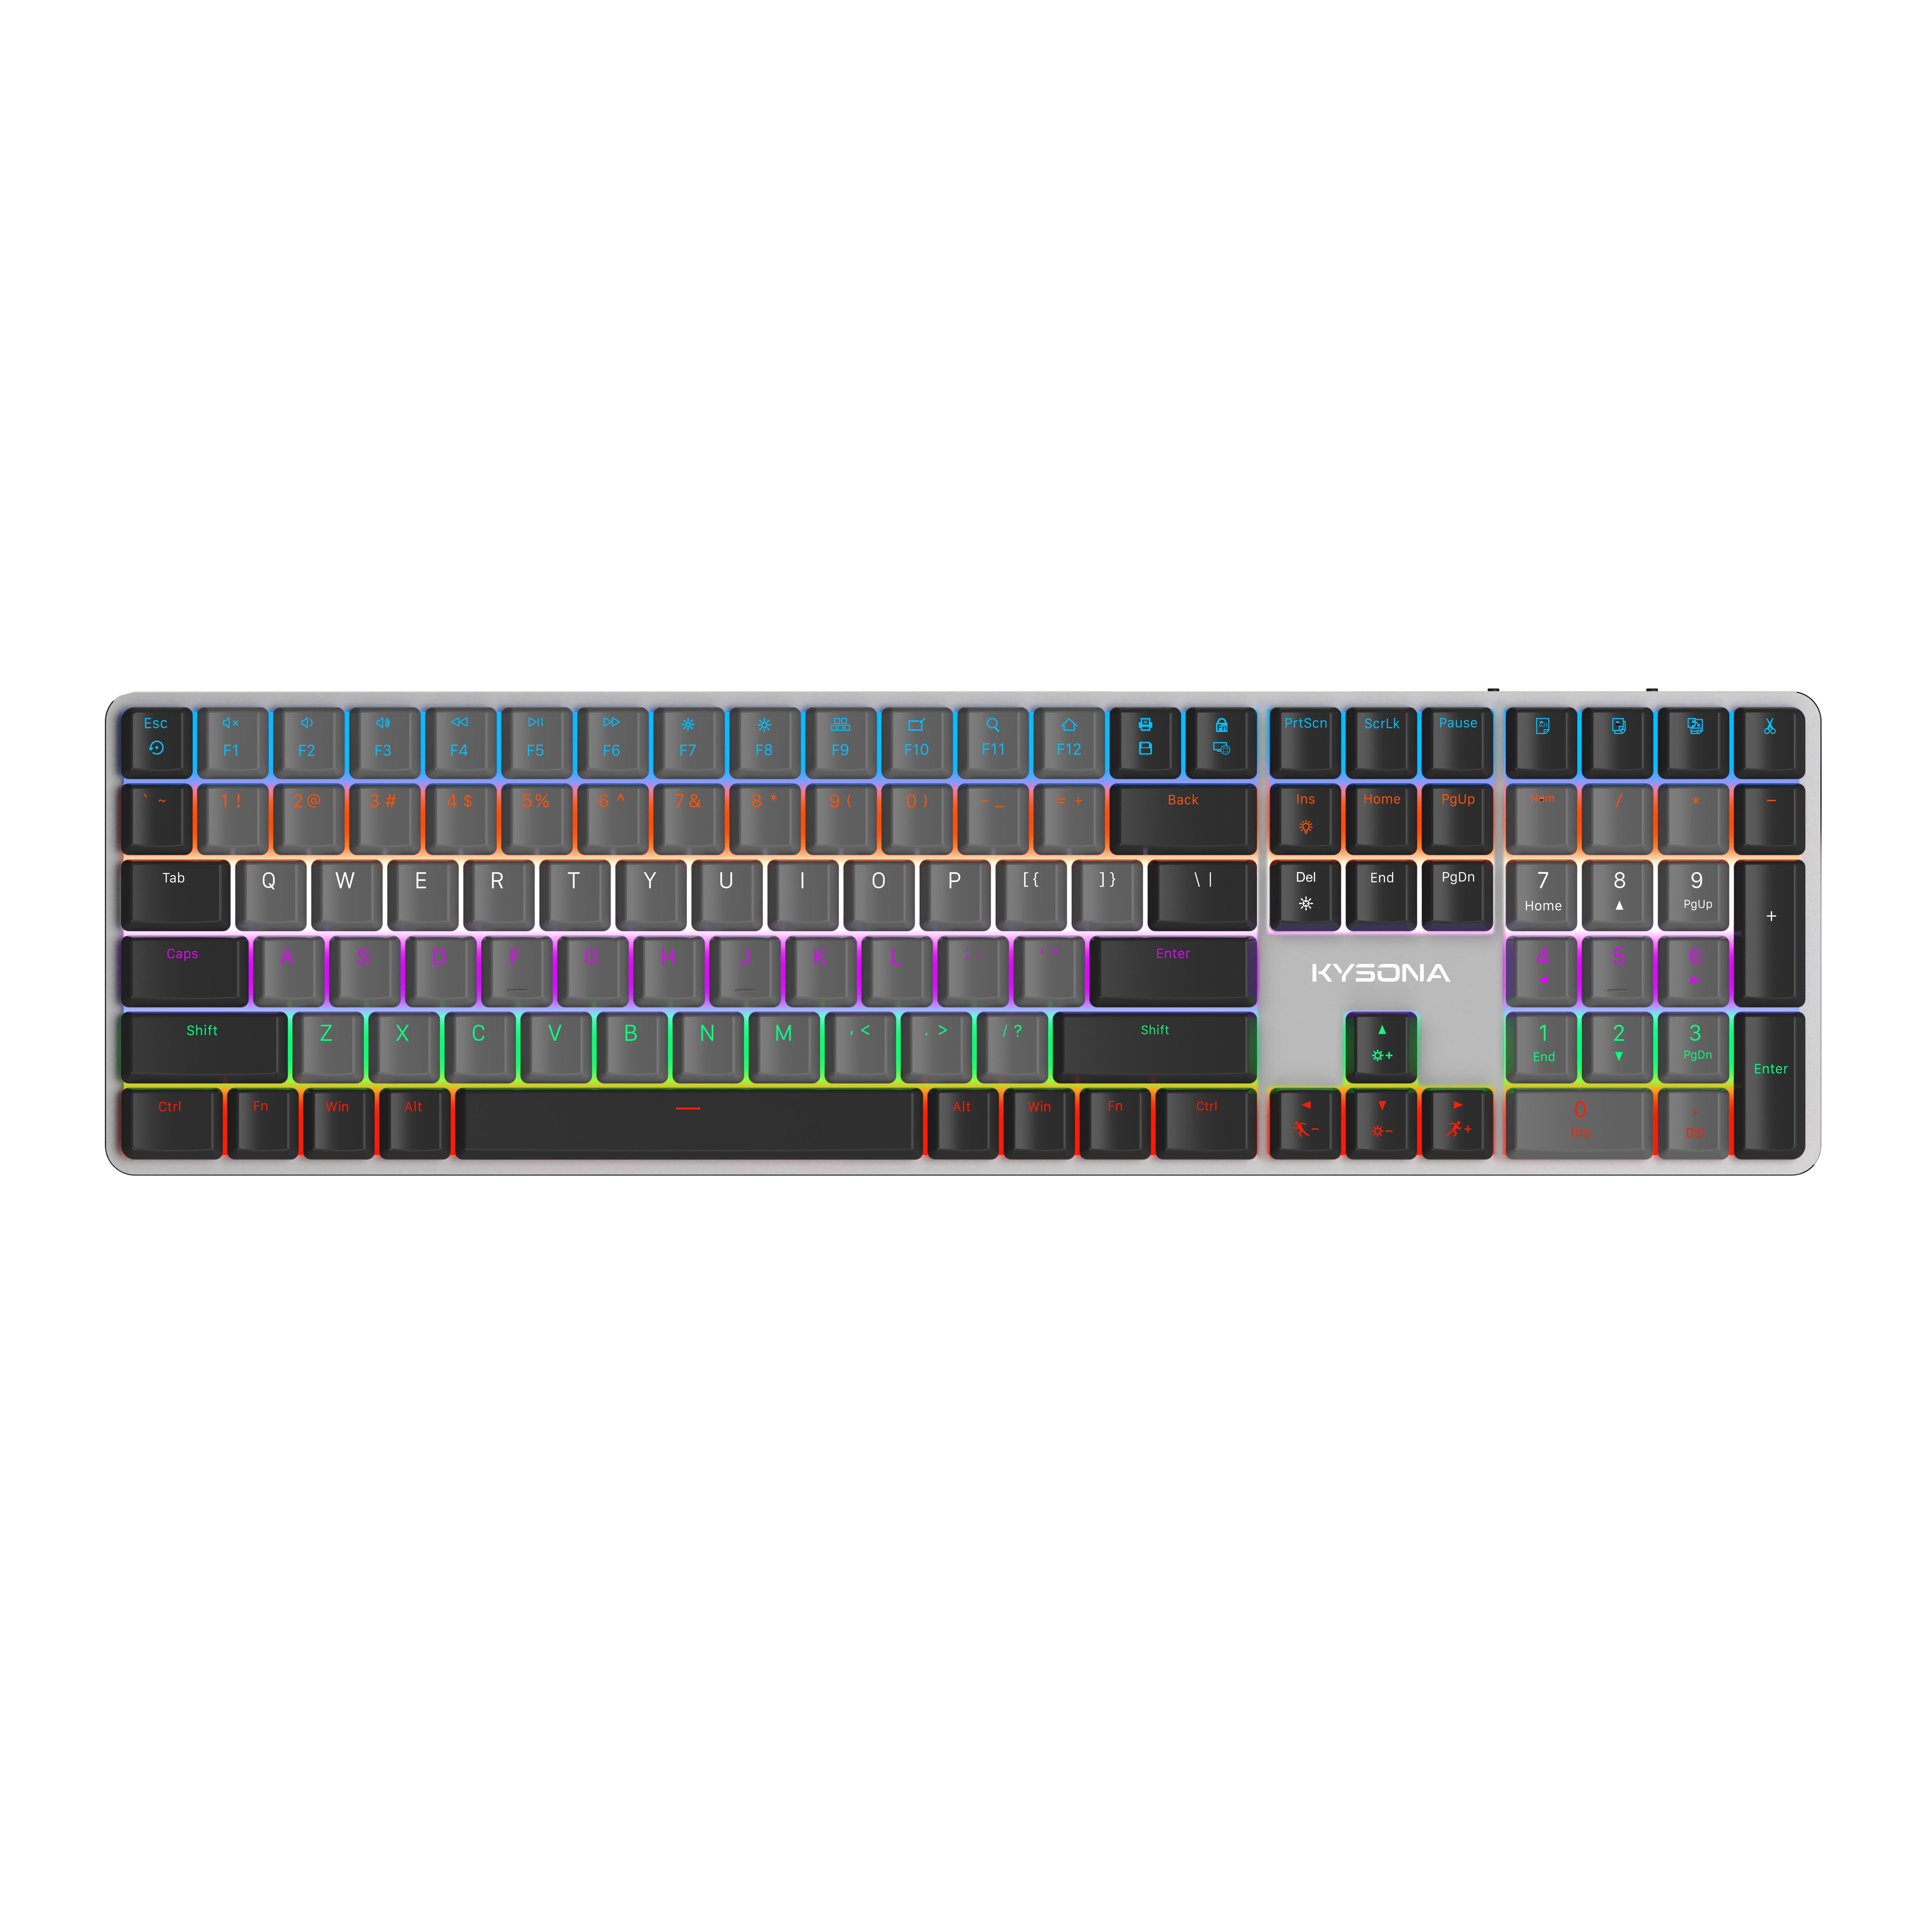 KM32 Wireless Low Profile Switch Keyboard